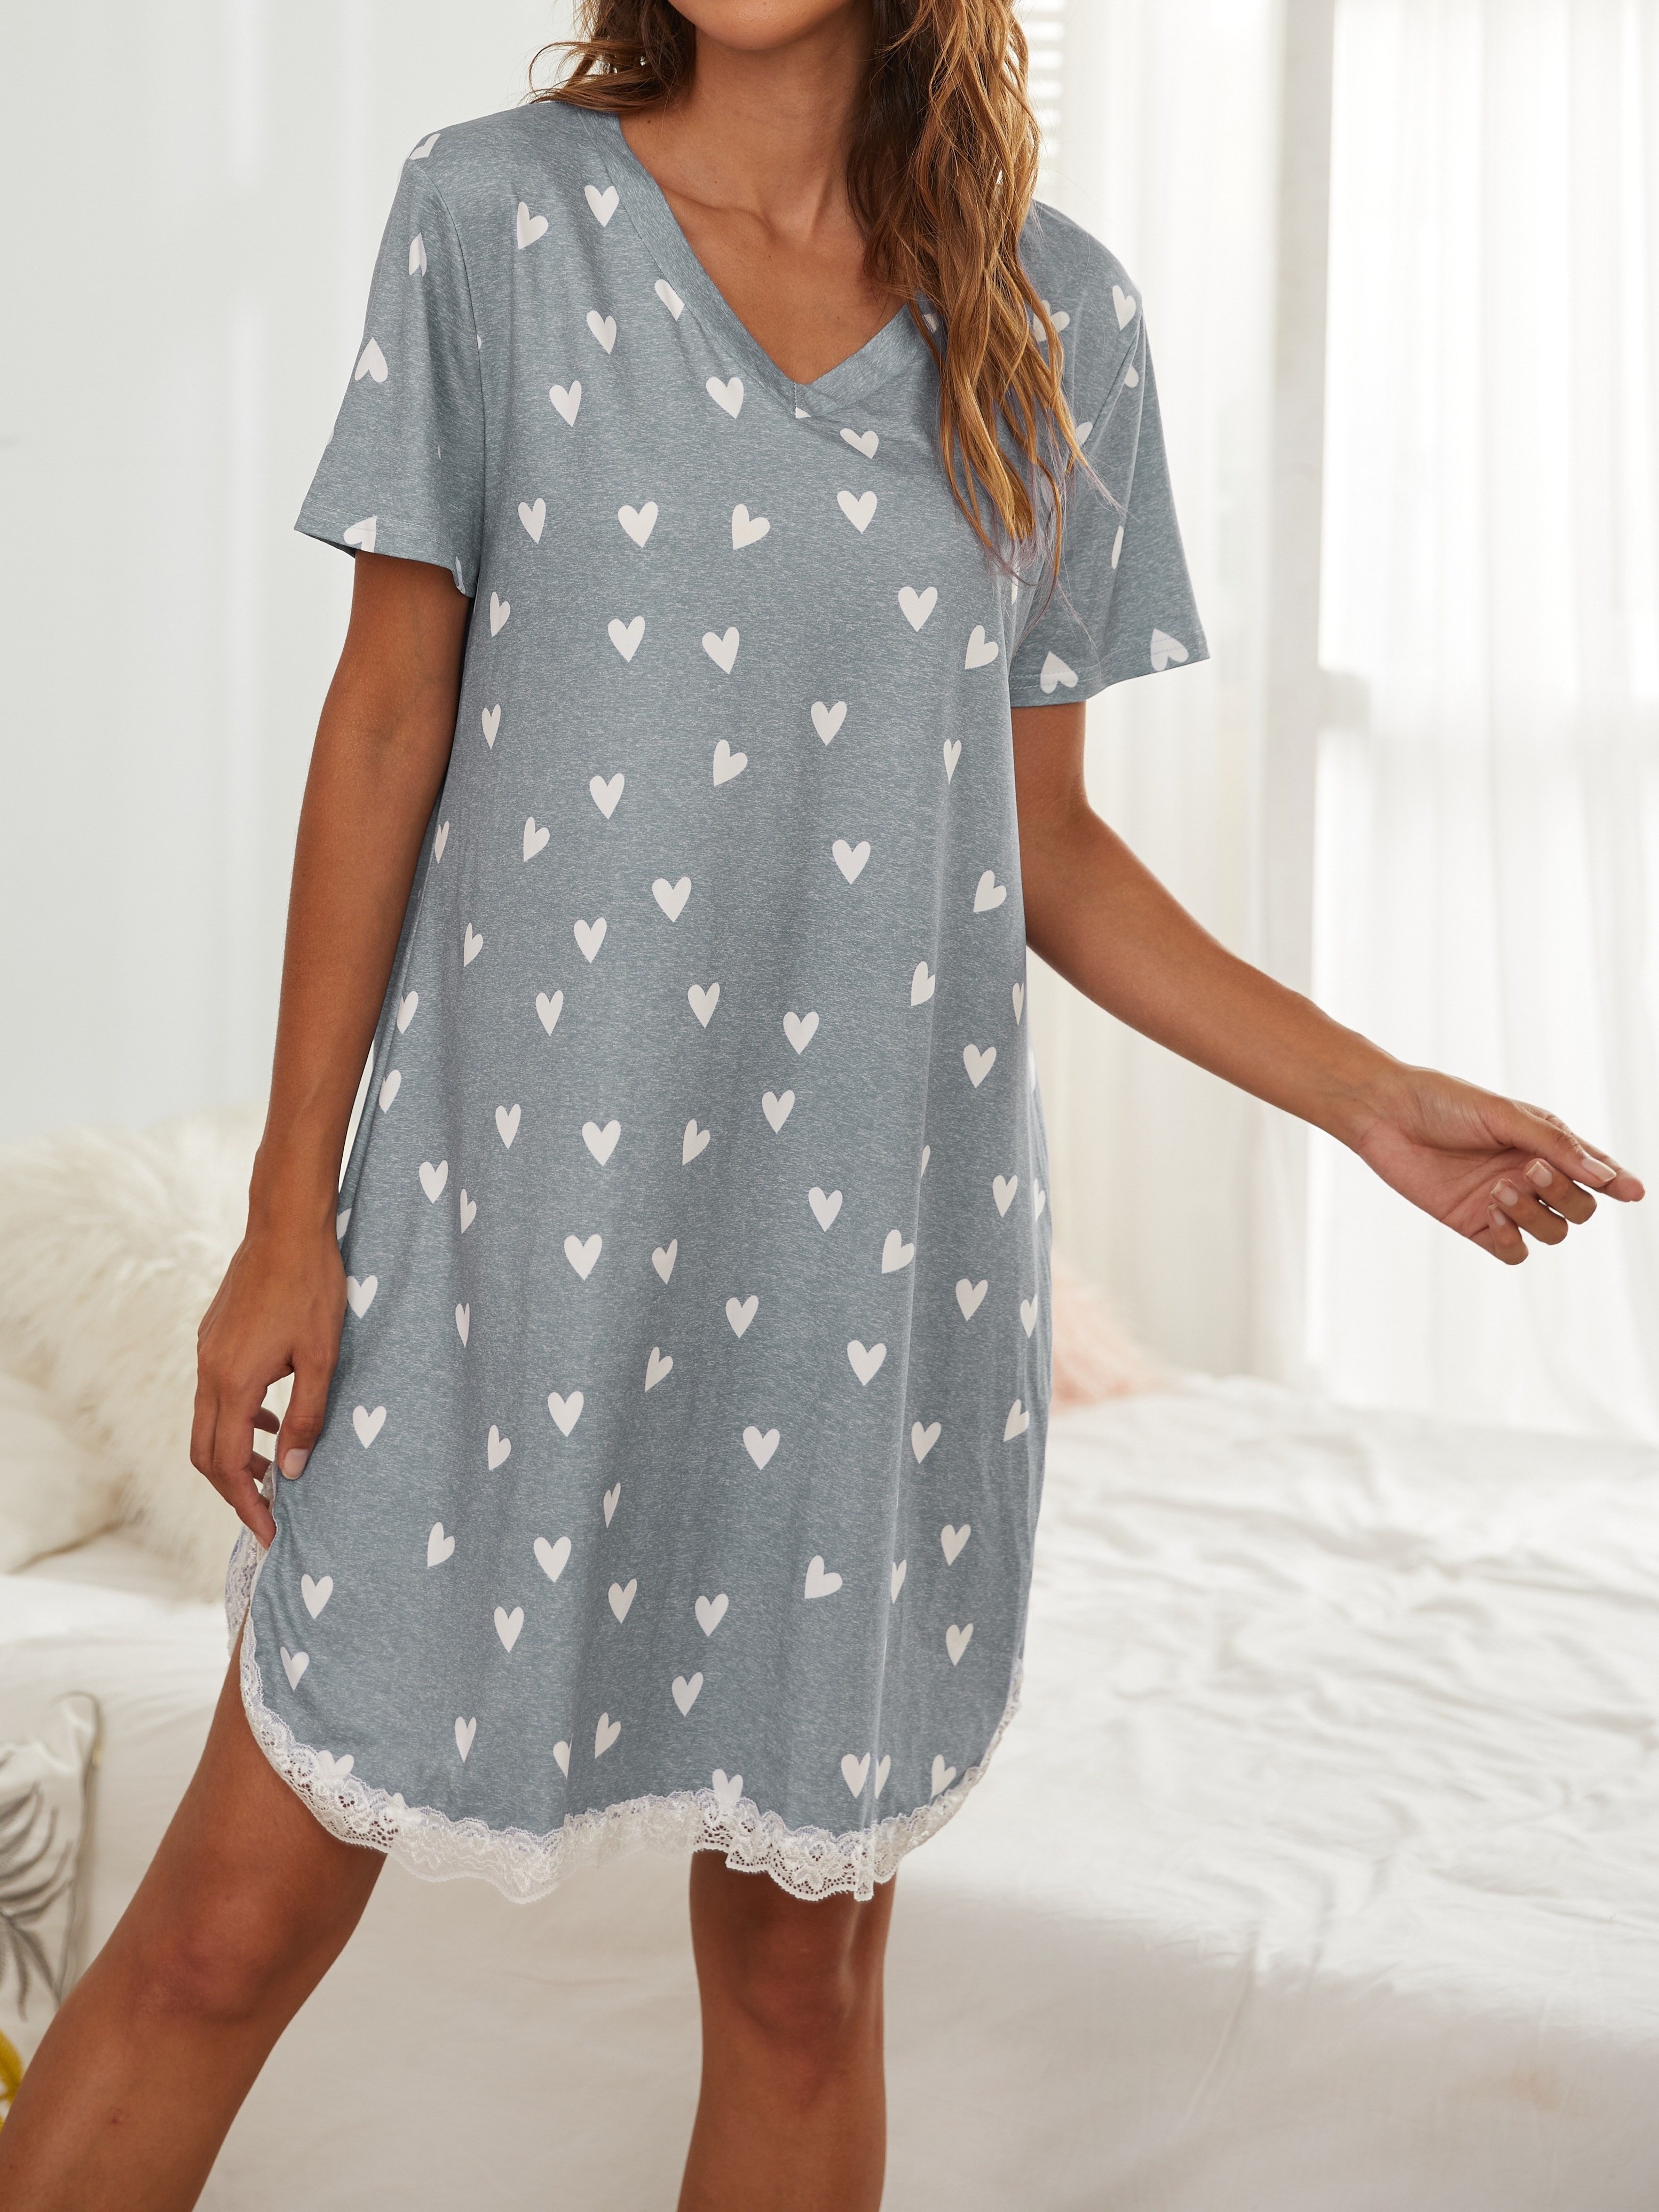 Womens Sleepwear Short Sleeve Cotton Sleep Shirts Tops Night Gown